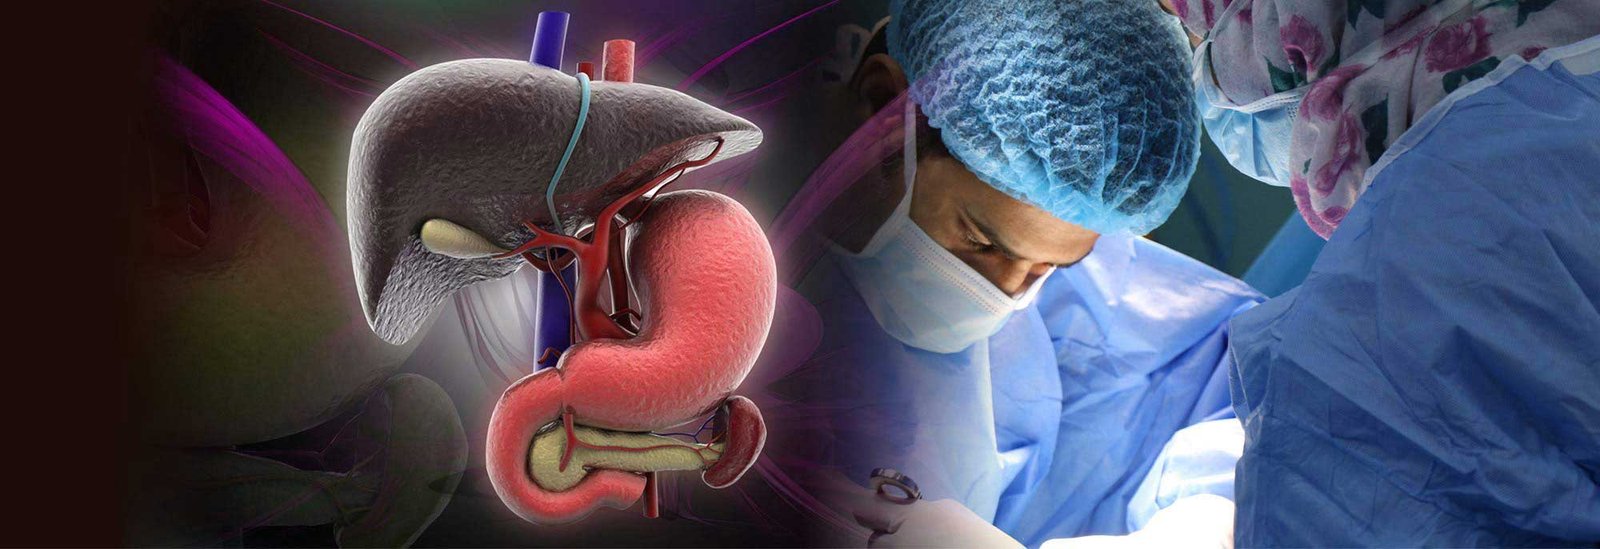 Liver Transplantation In India